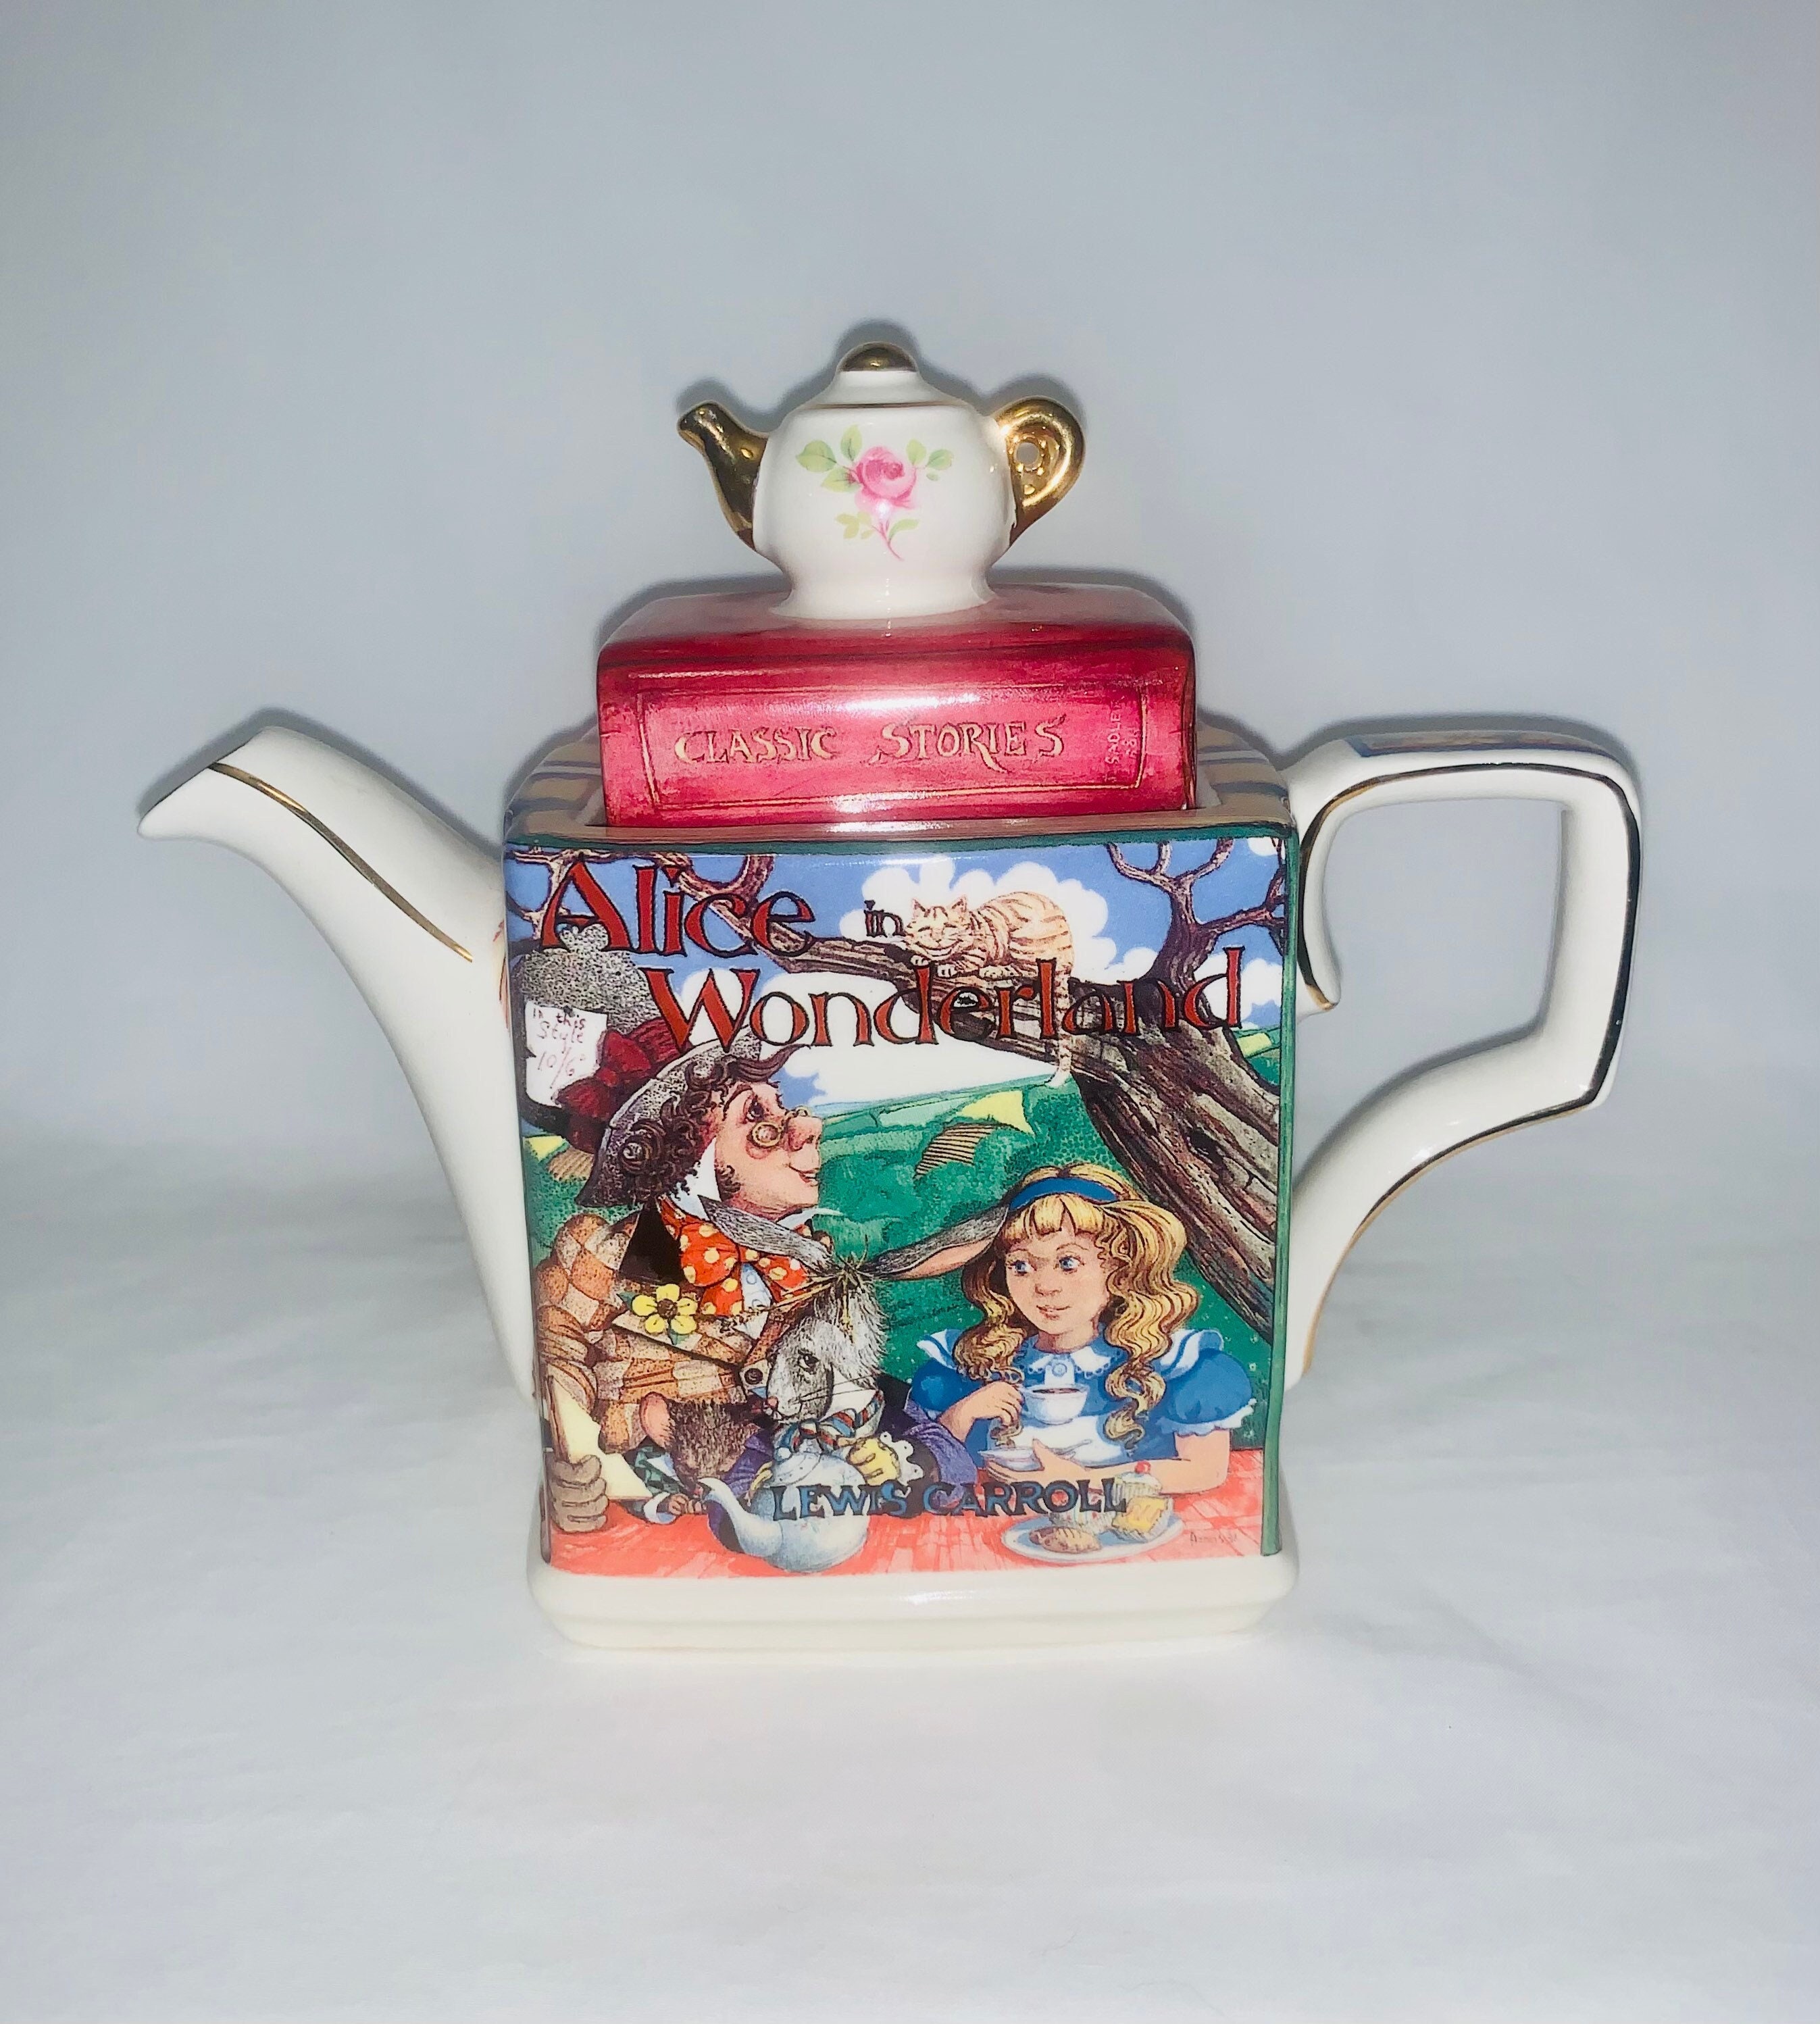 Sadler - Alice In Wonderland, Classic Stories 3-4 cup teapot